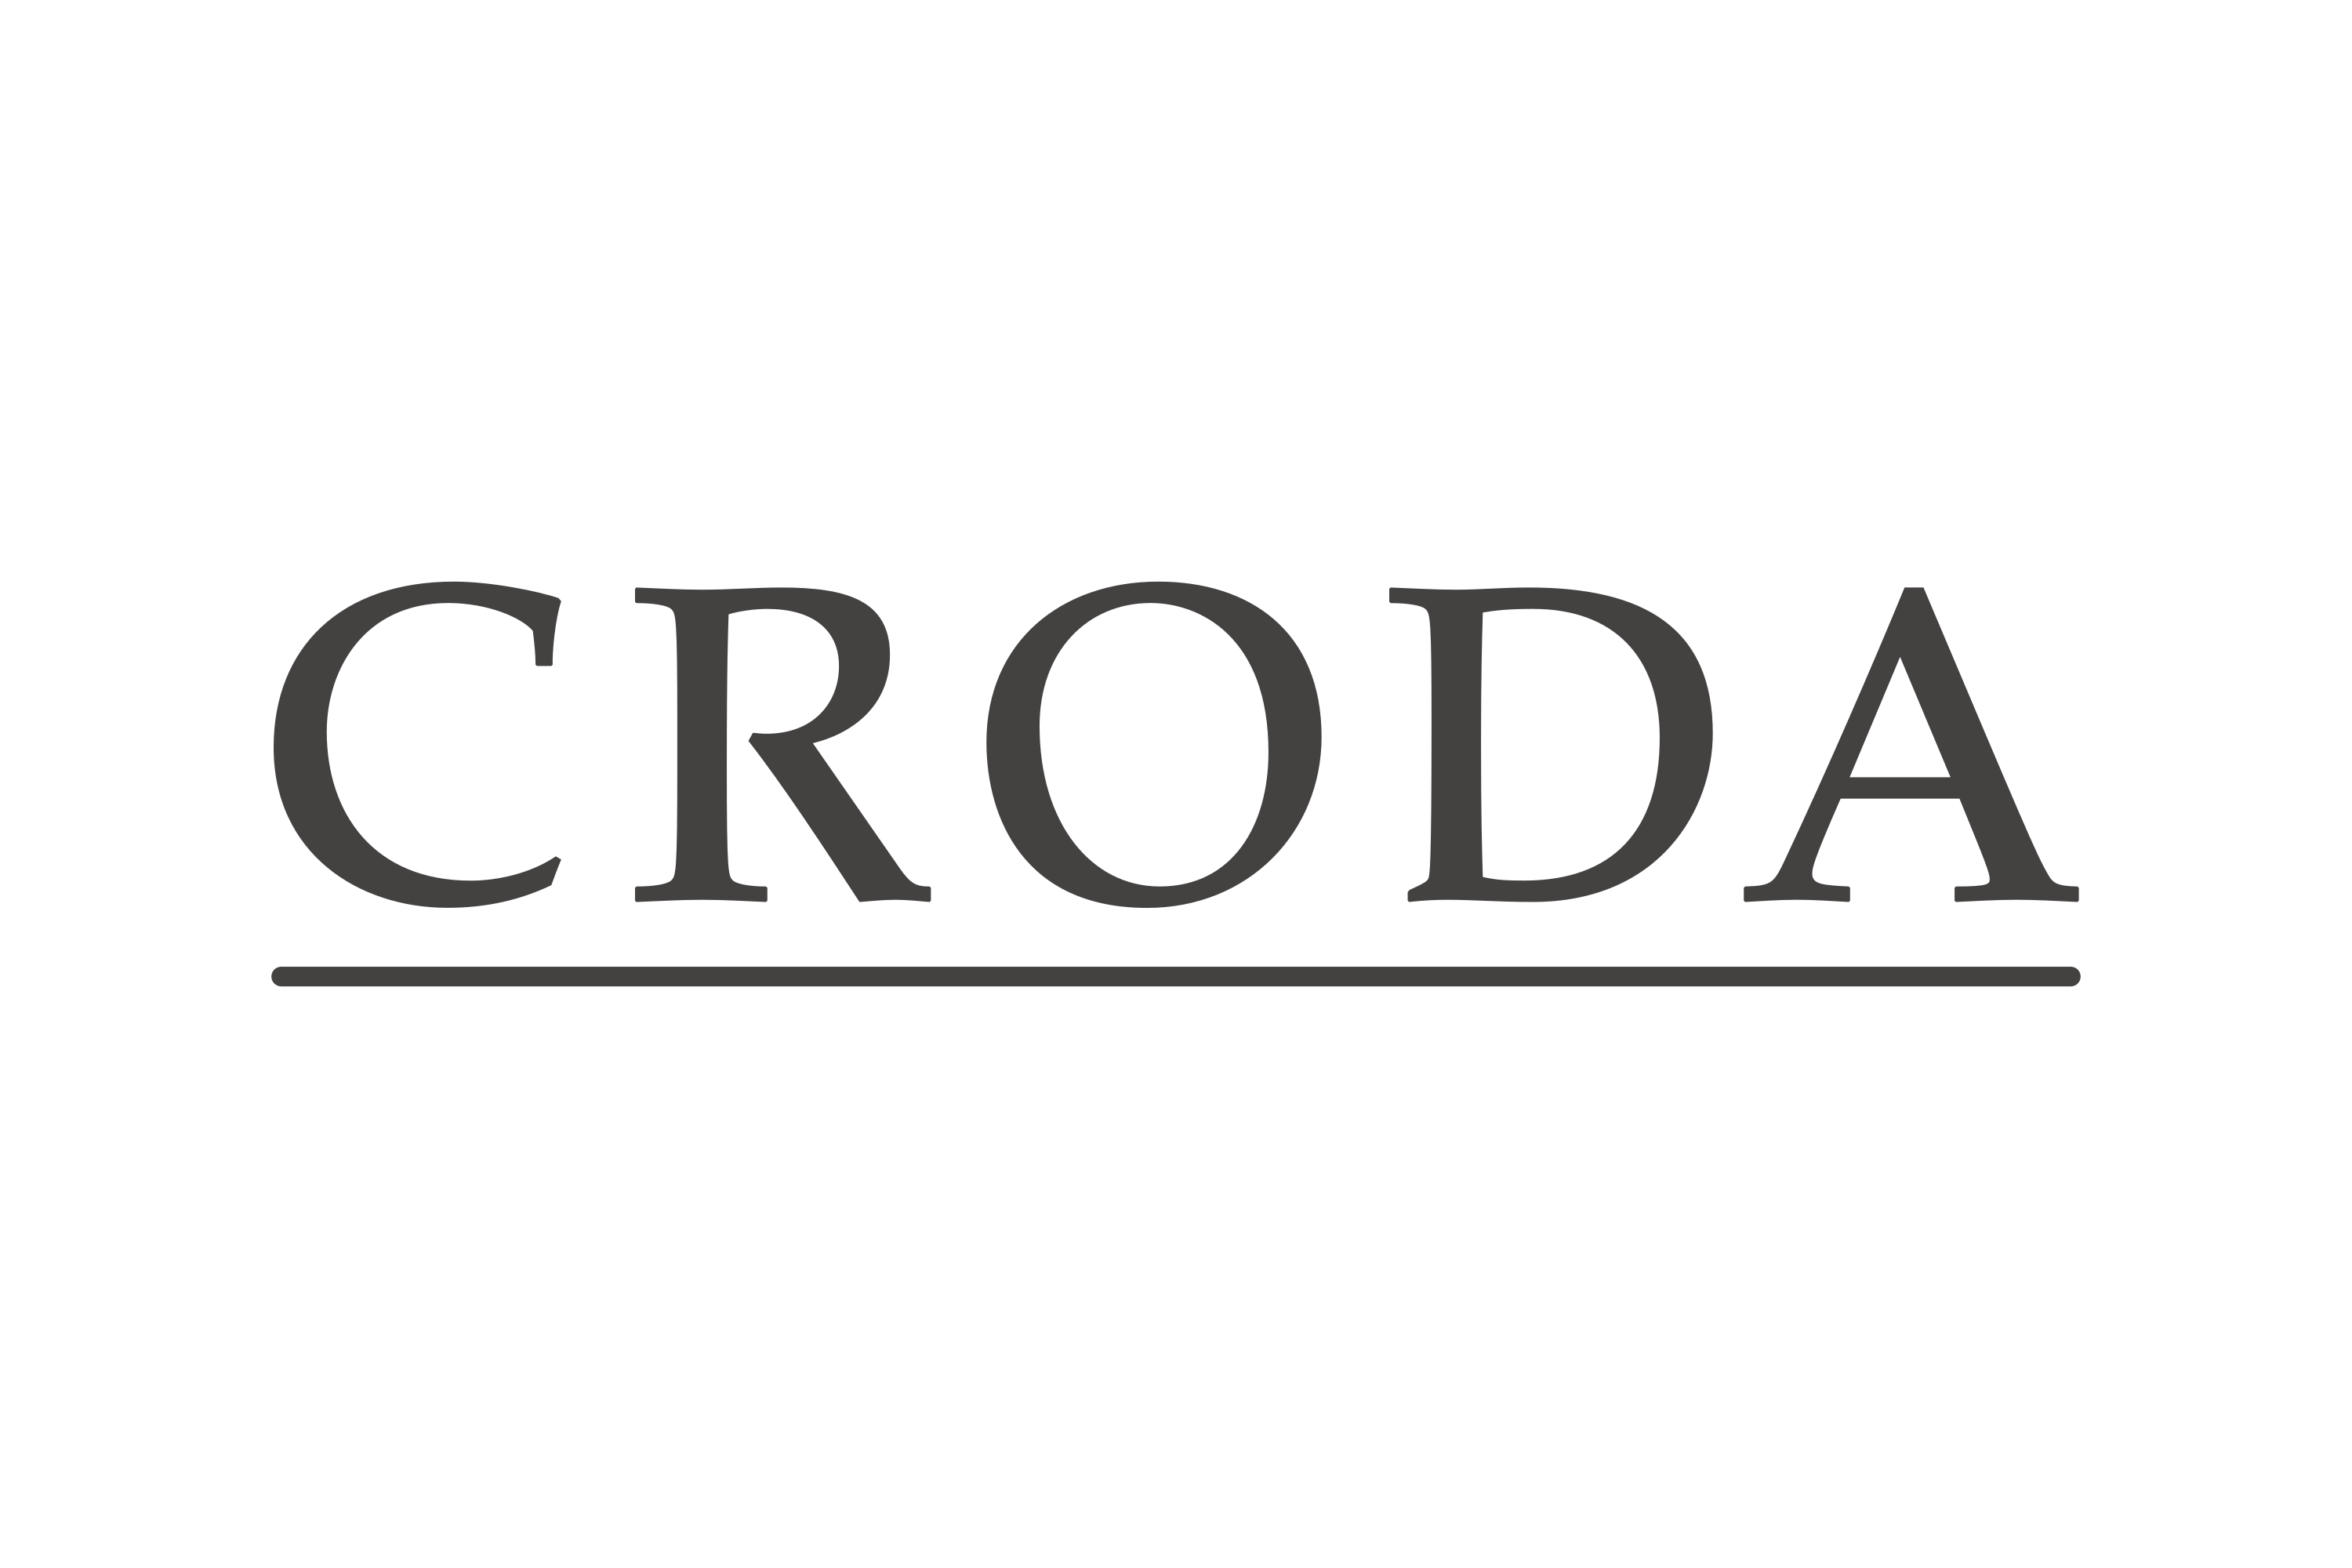 CRODA INTERNATIONAL PLC